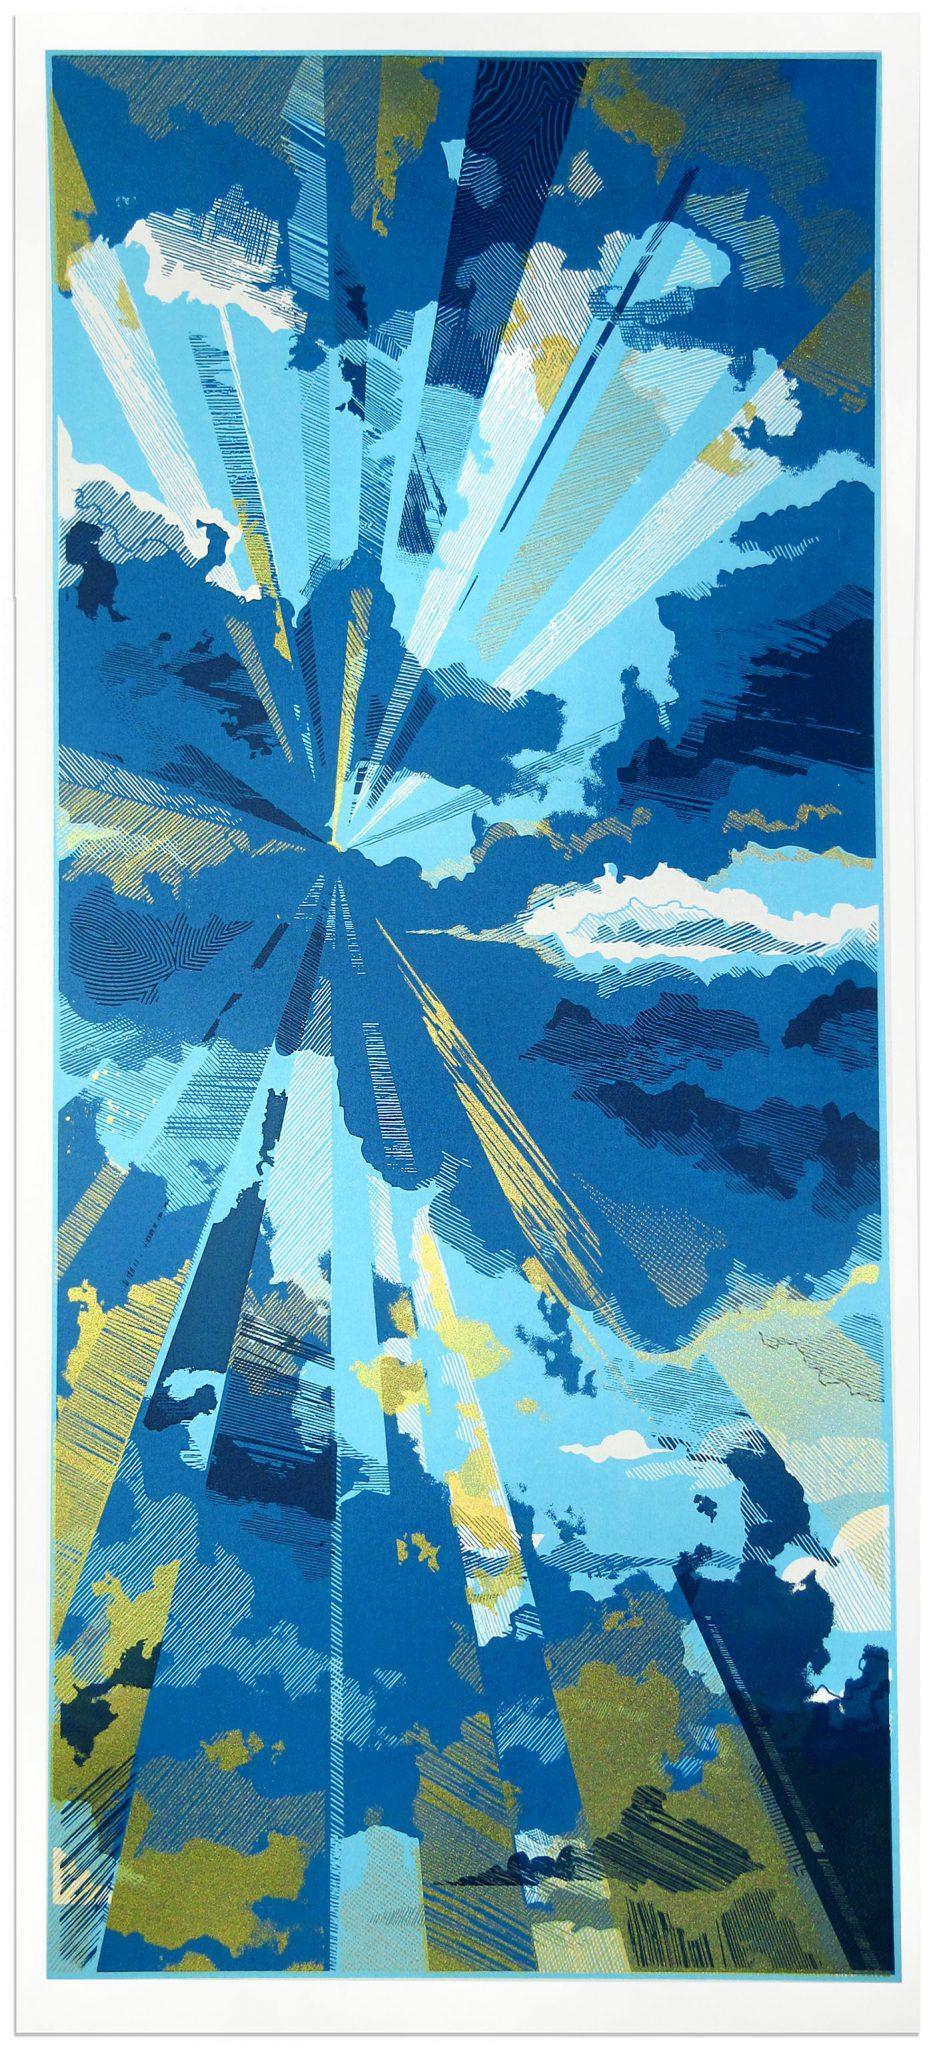 Cloudburst and Daisy Field diptych - Print by Chris Keegan